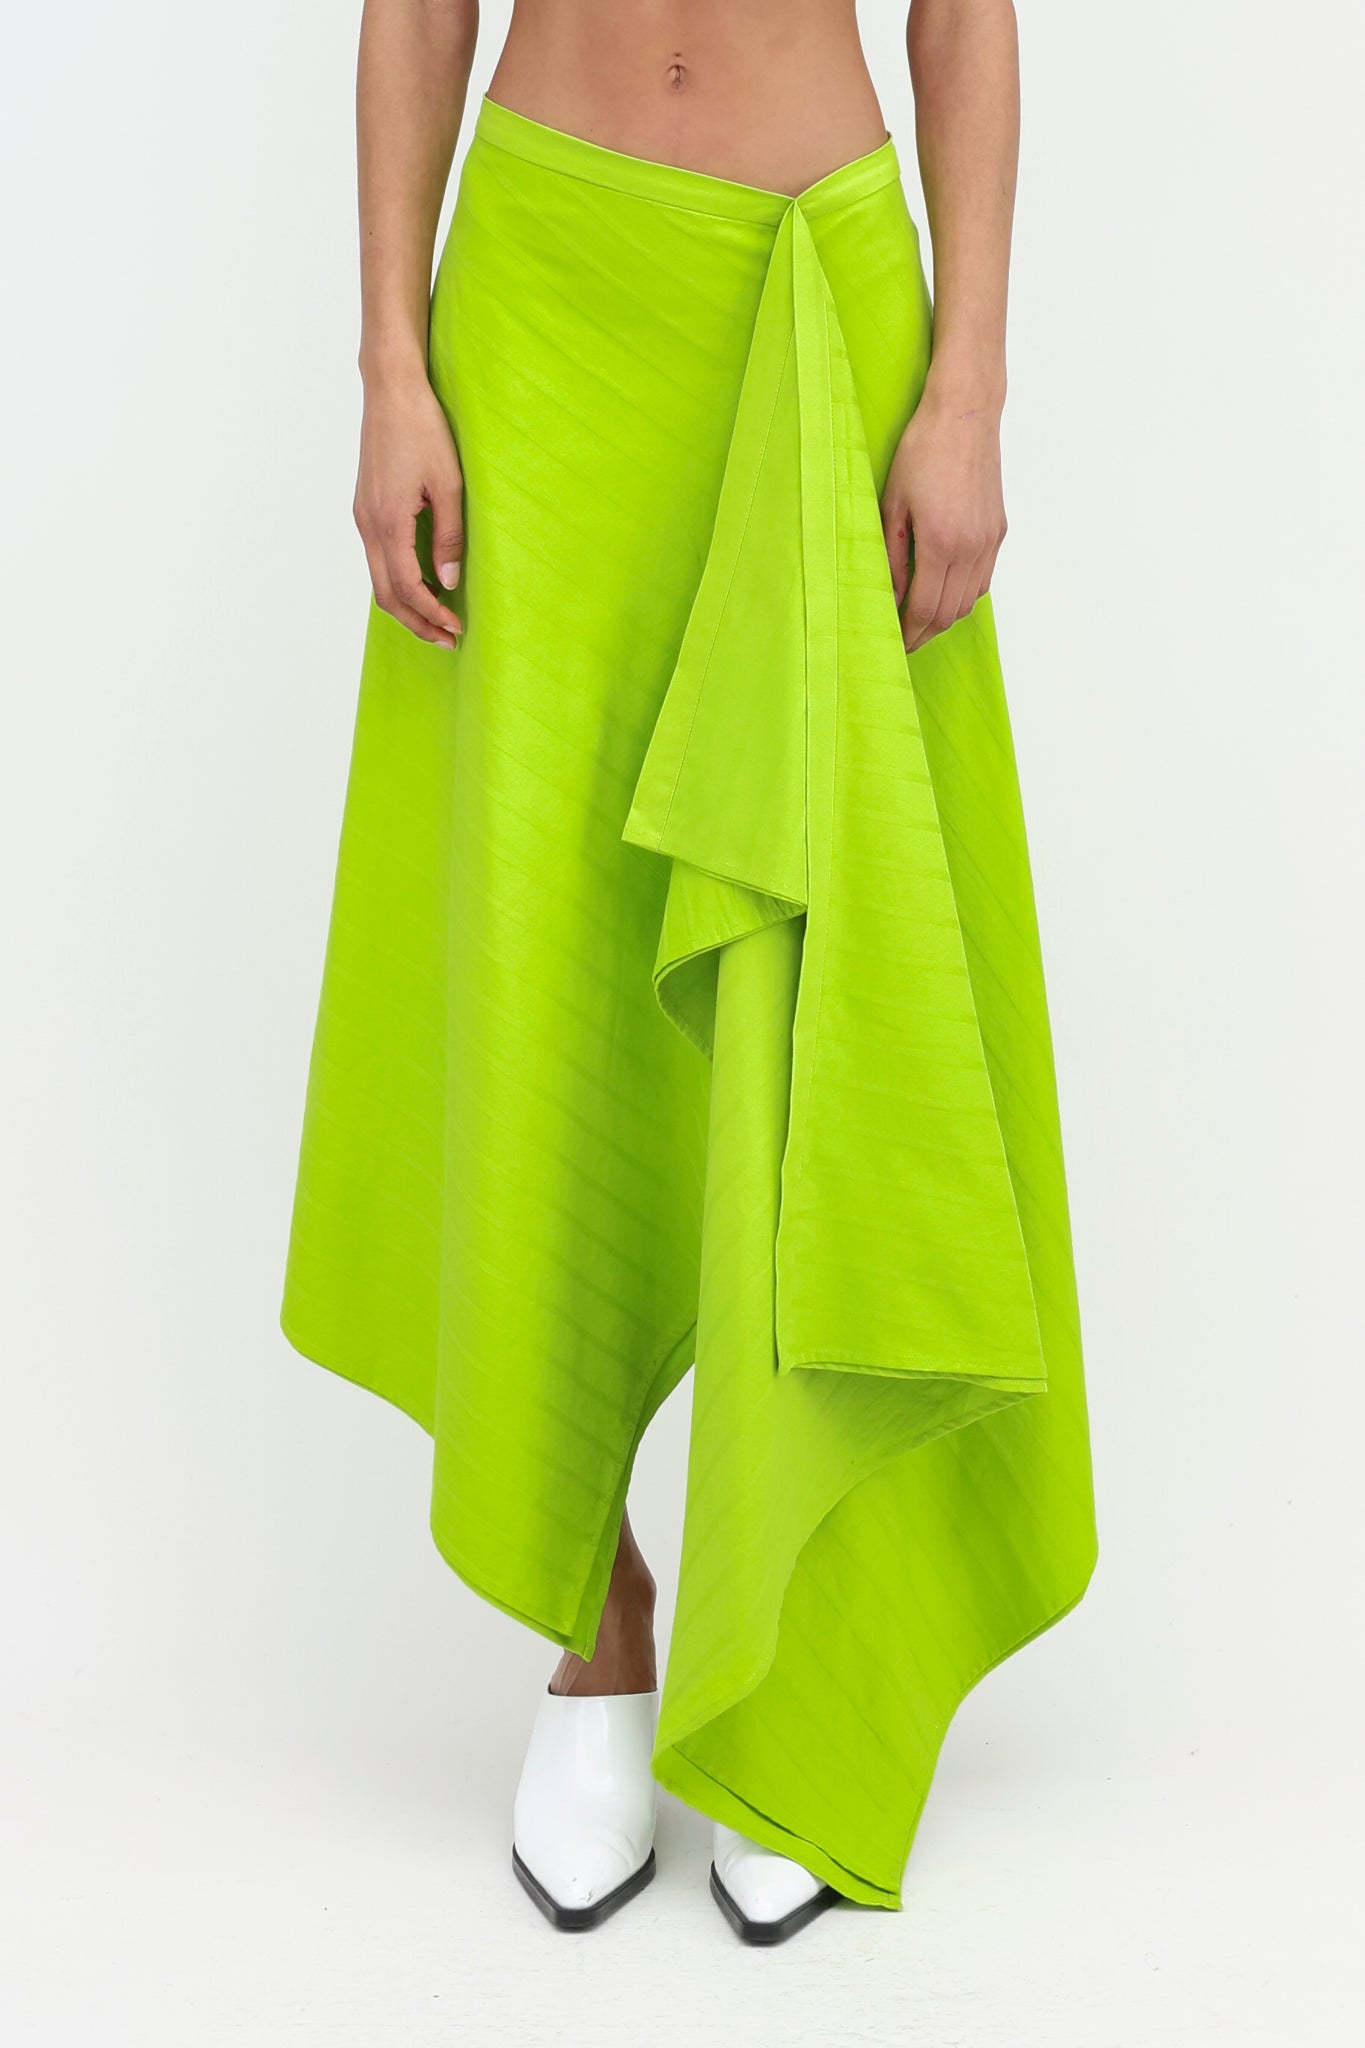 Yenthe Skirt Poisonous Green